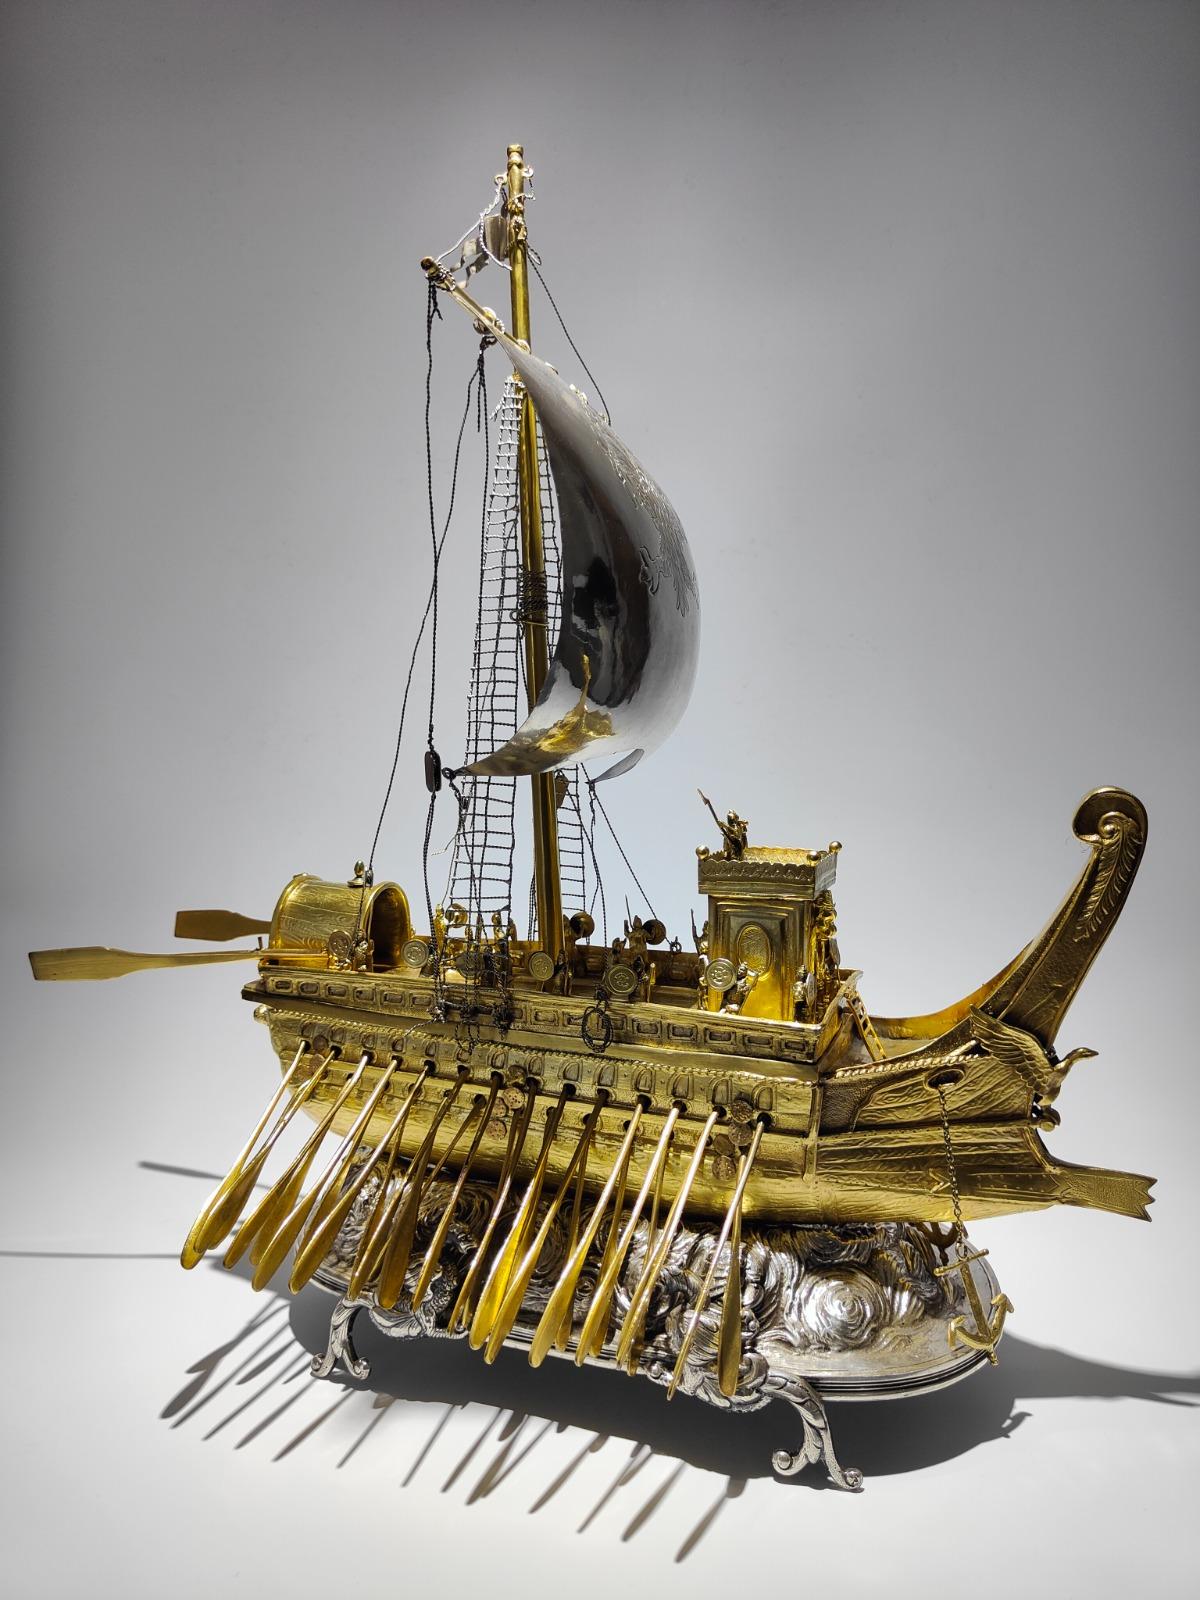 18th Century Spanish silver Roman Bireme Automaton Ship Nef
Antique 18th century Spanish solid silver model of a ship, called a 